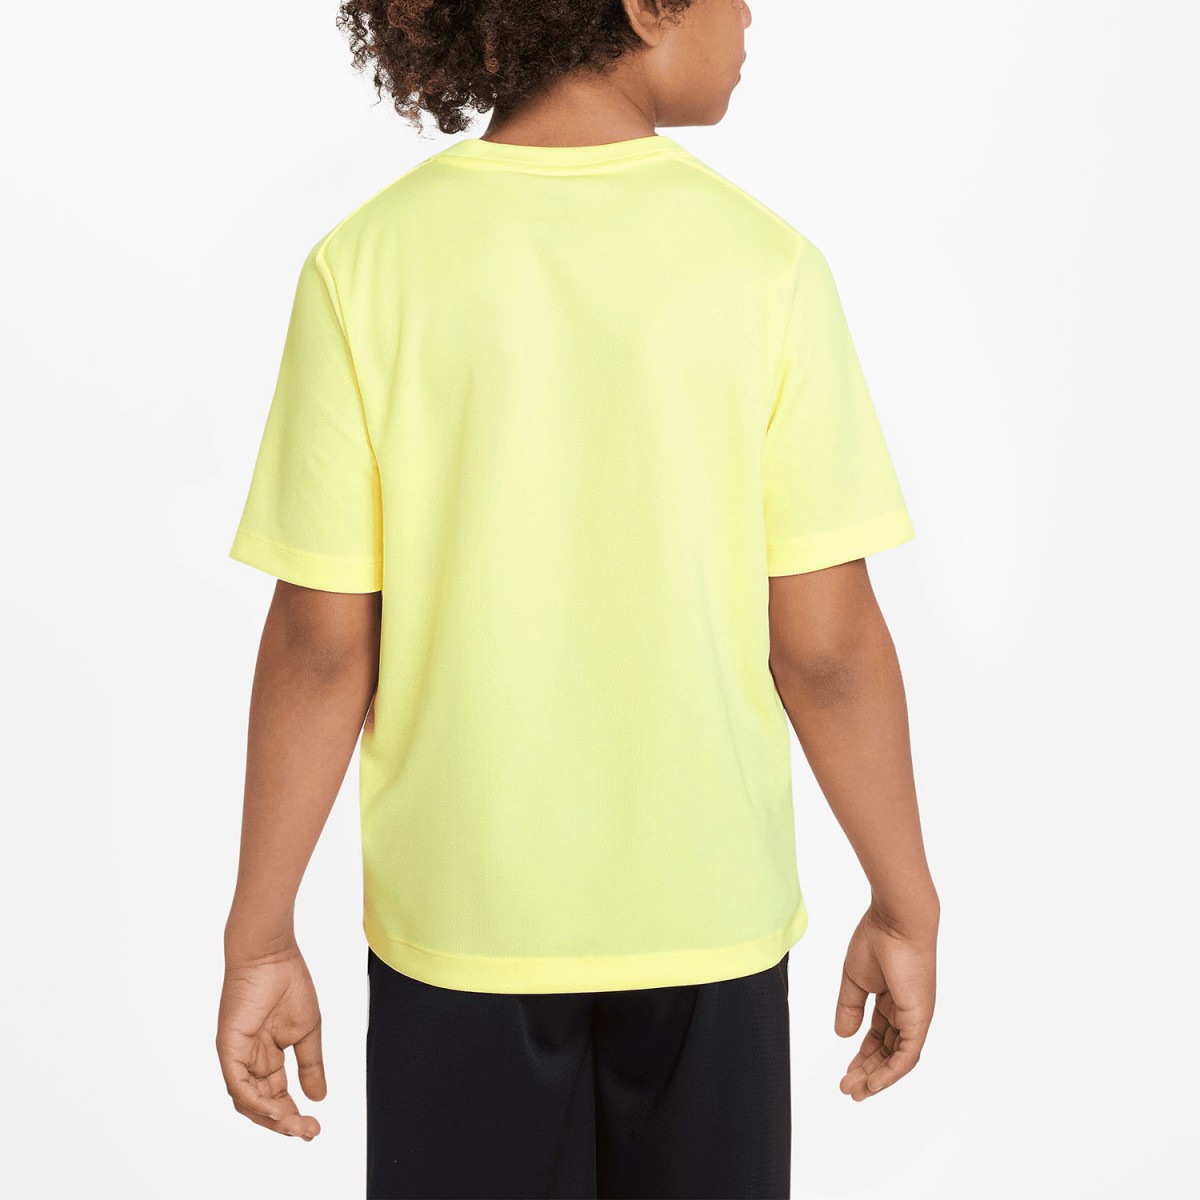 Теннисная футболка детская Nike Multi T-Shirt Boy citron tint/white